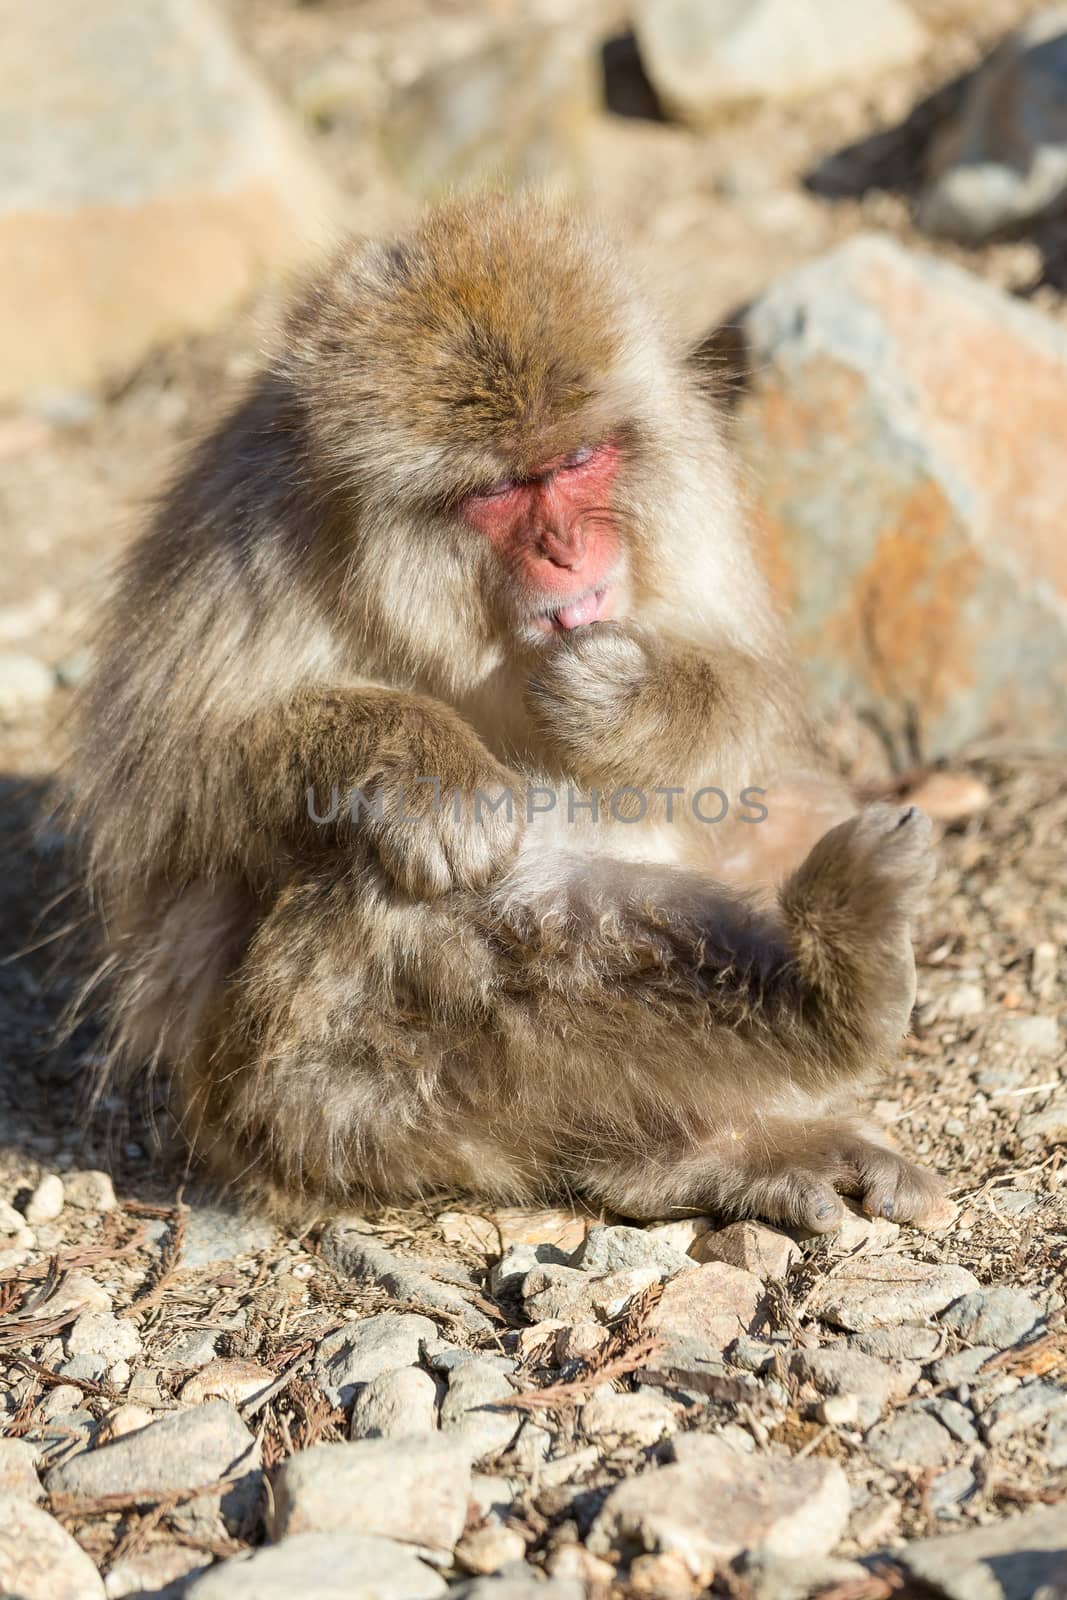 Monkey in wildlife by leungchopan